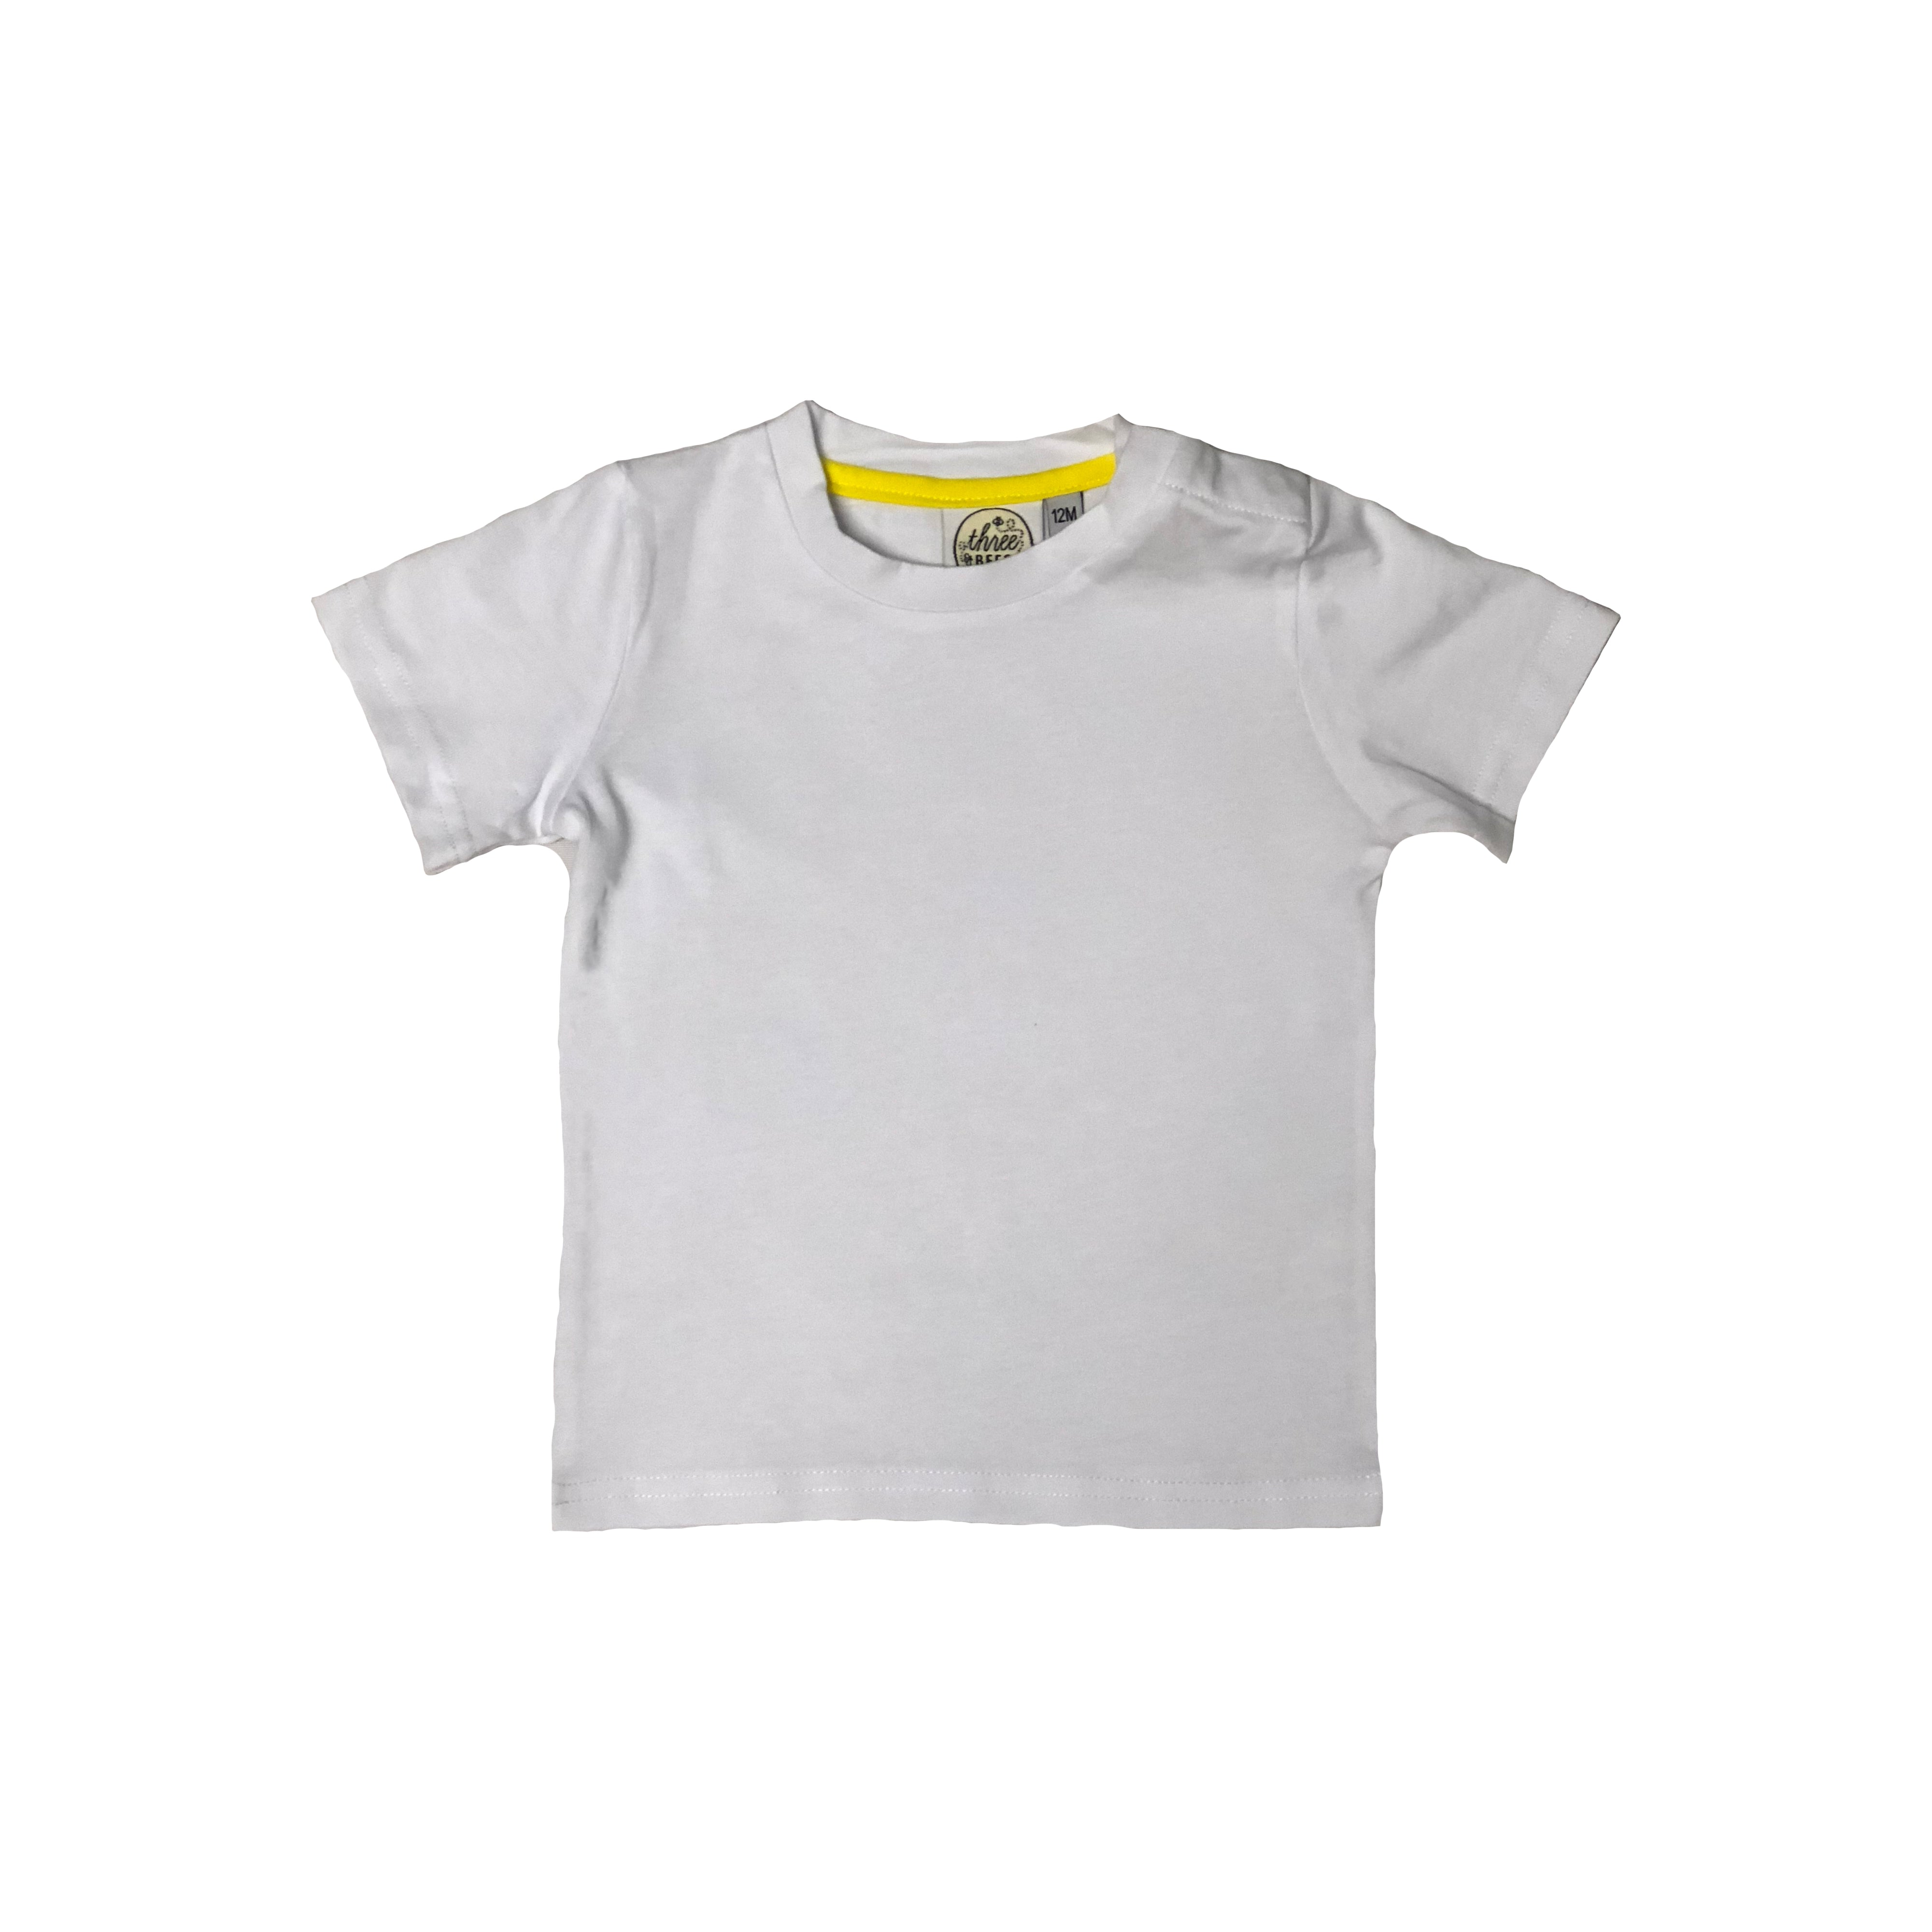 Bee Basic Boys White T-Shirt - Runs Small